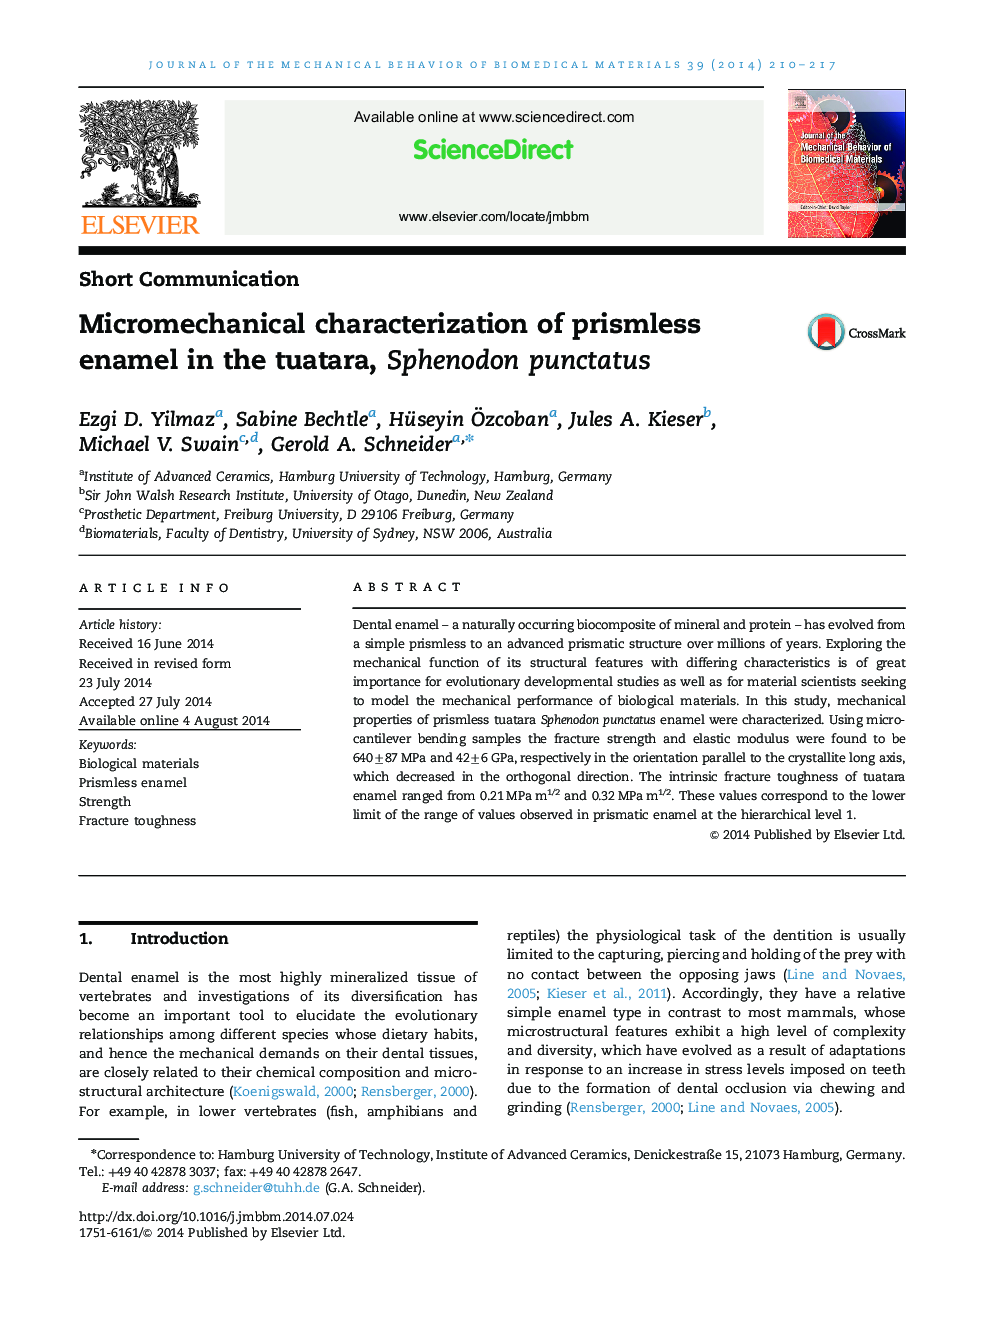 Micromechanical characterization of prismless enamel in the tuatara, Sphenodon punctatus